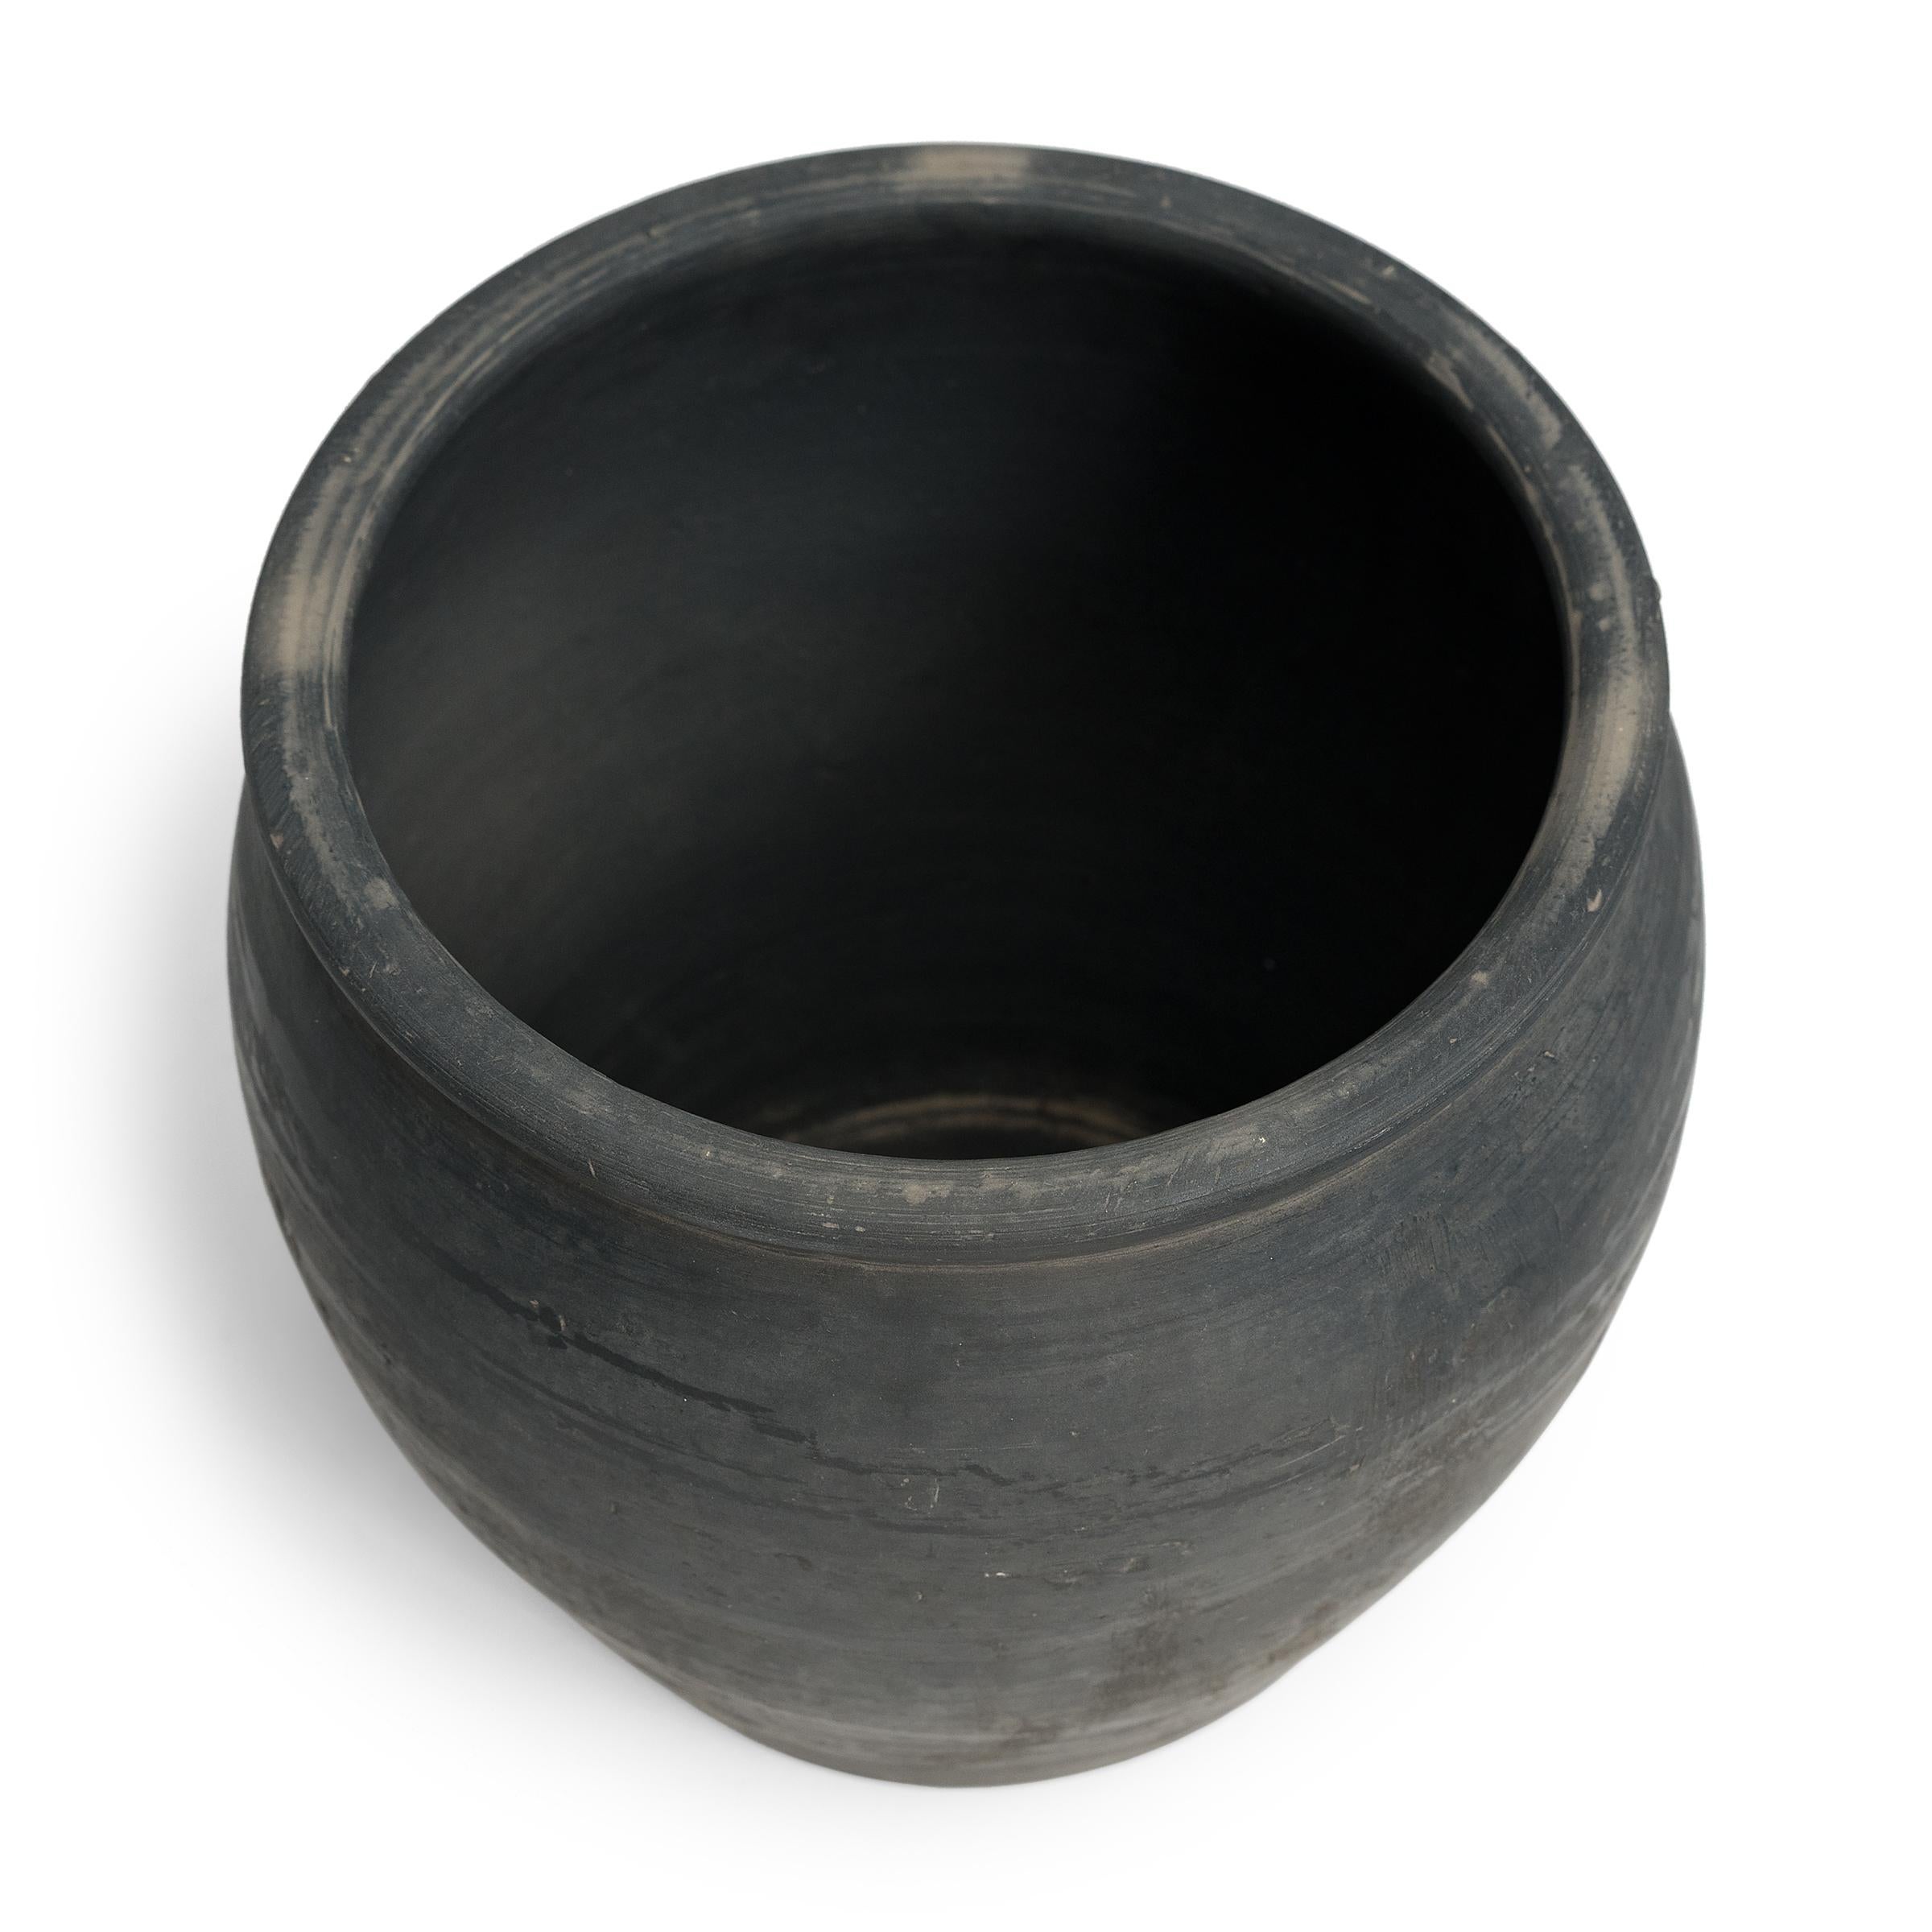 Organic Modern Chinese Black Clay Vessel, c. 1900